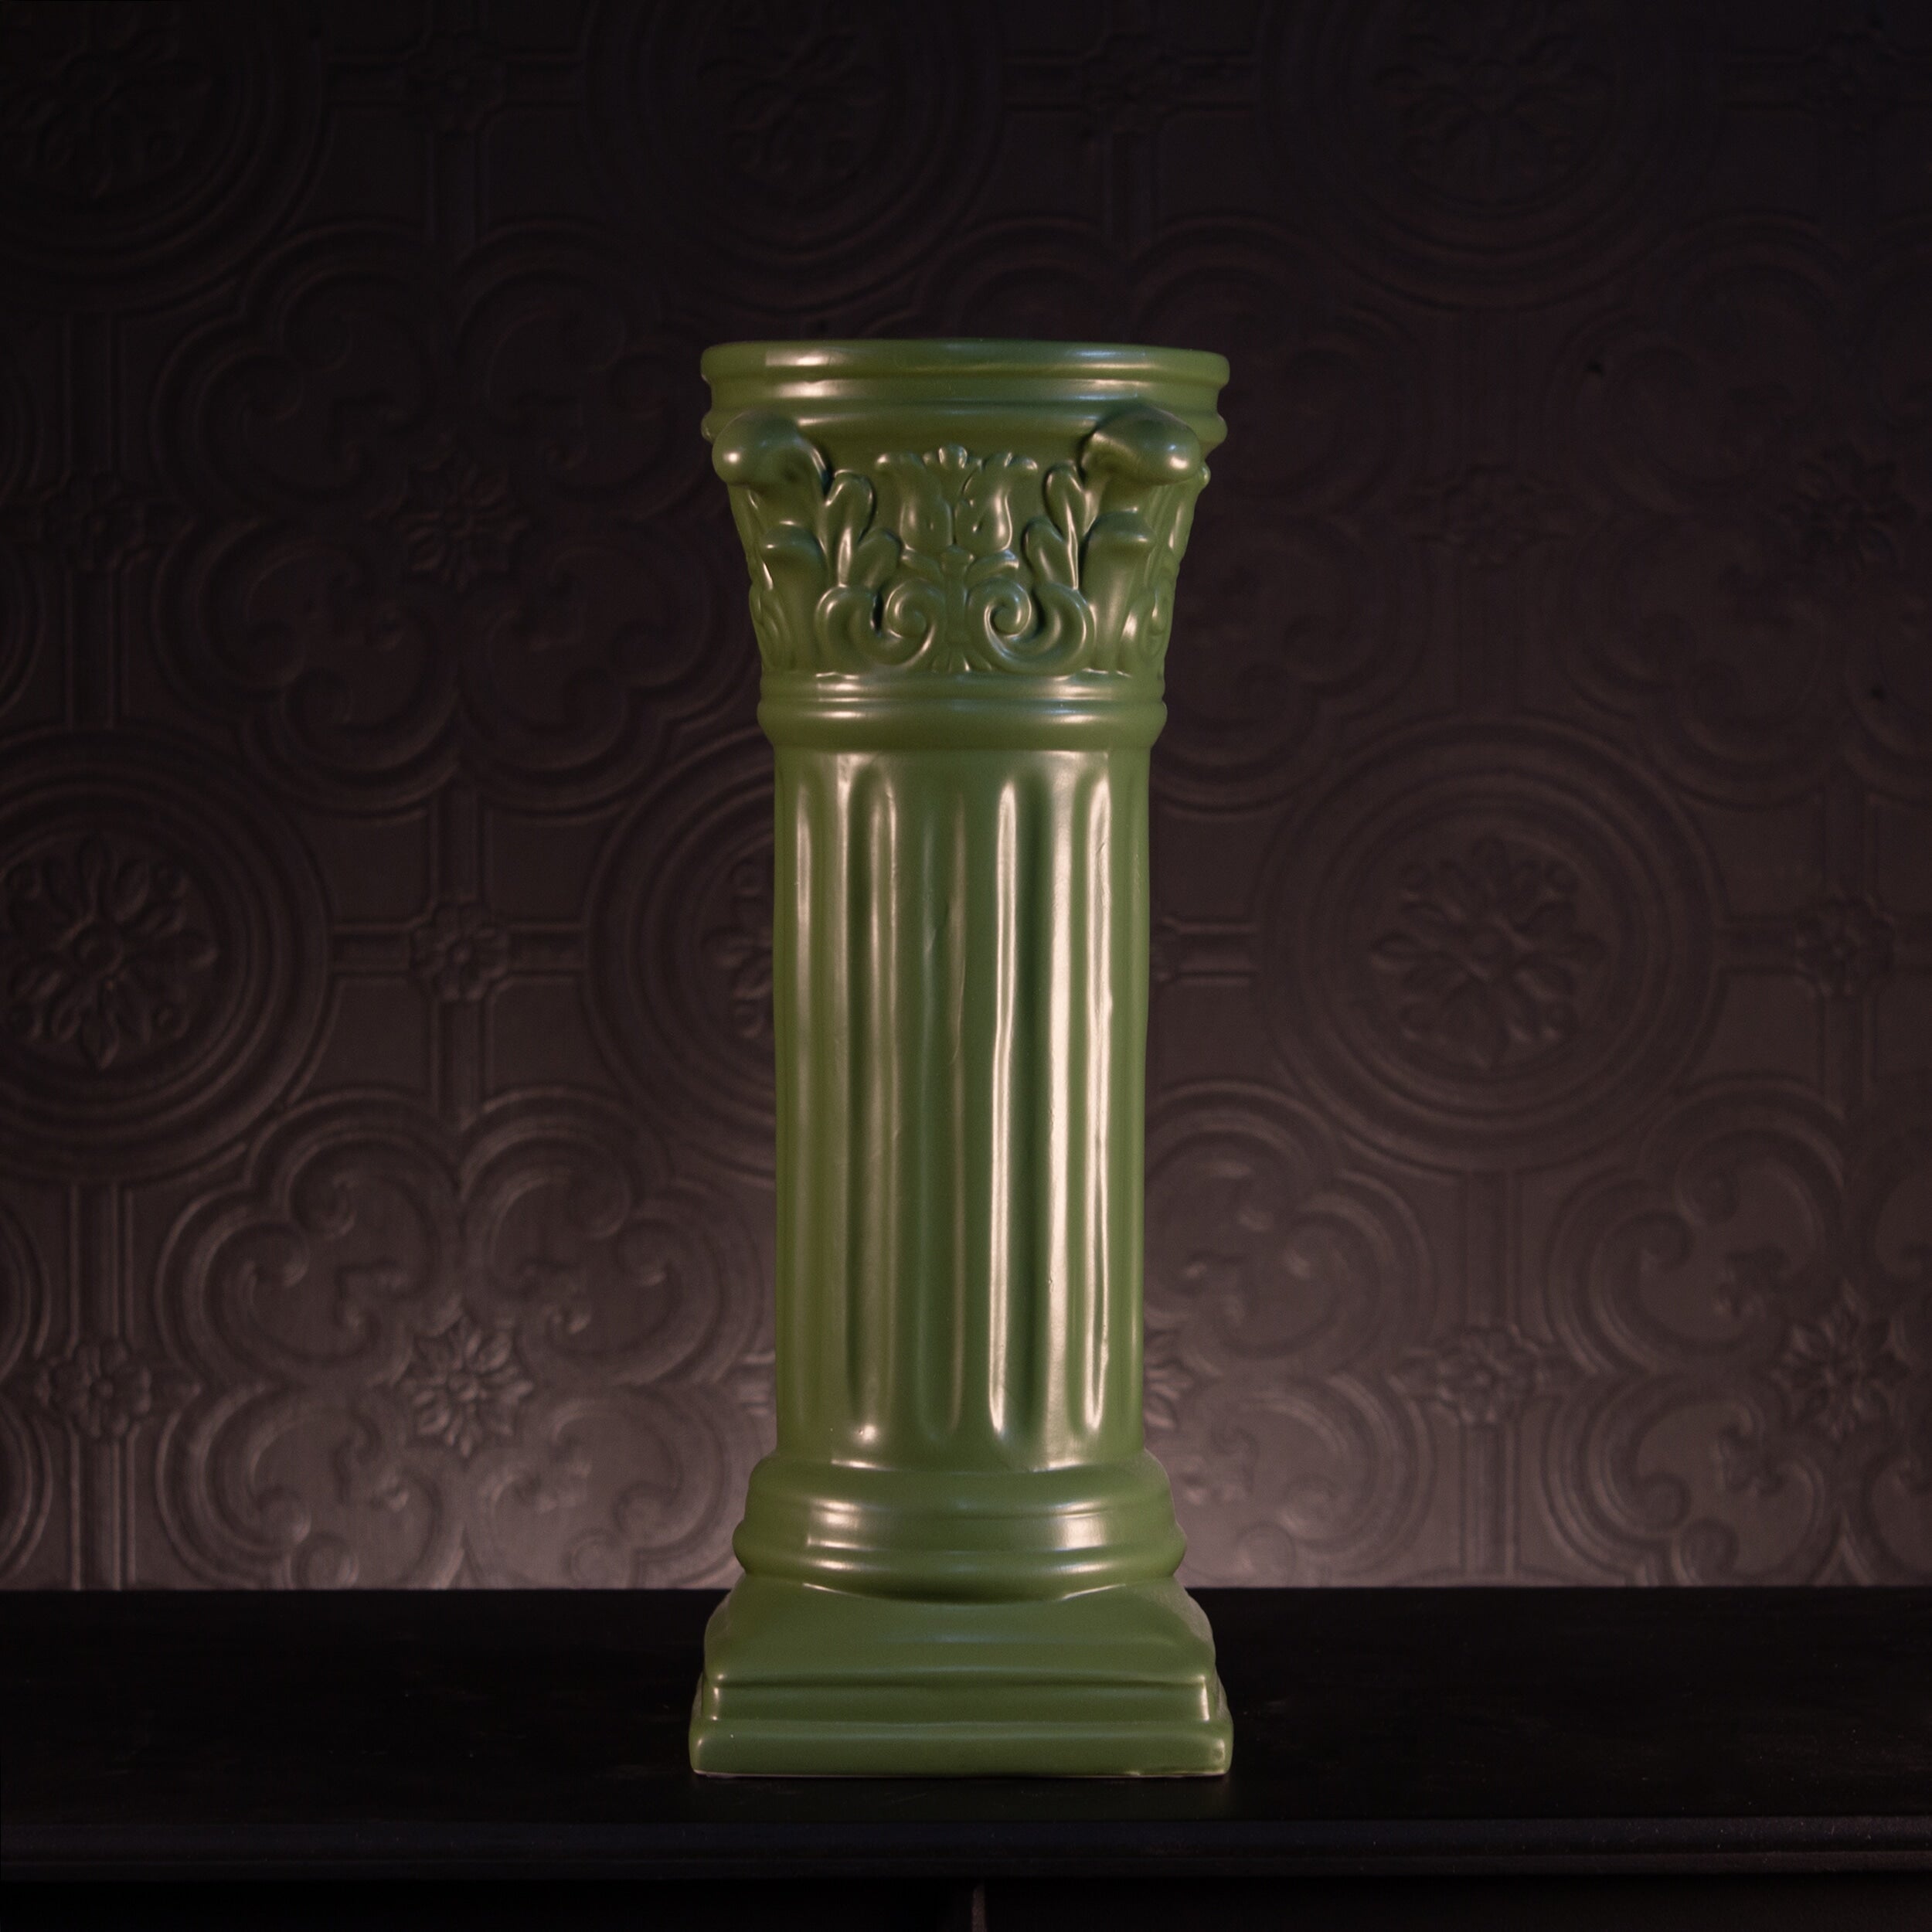 column vase - green - the Blackened Teeth Gothic Home Decor